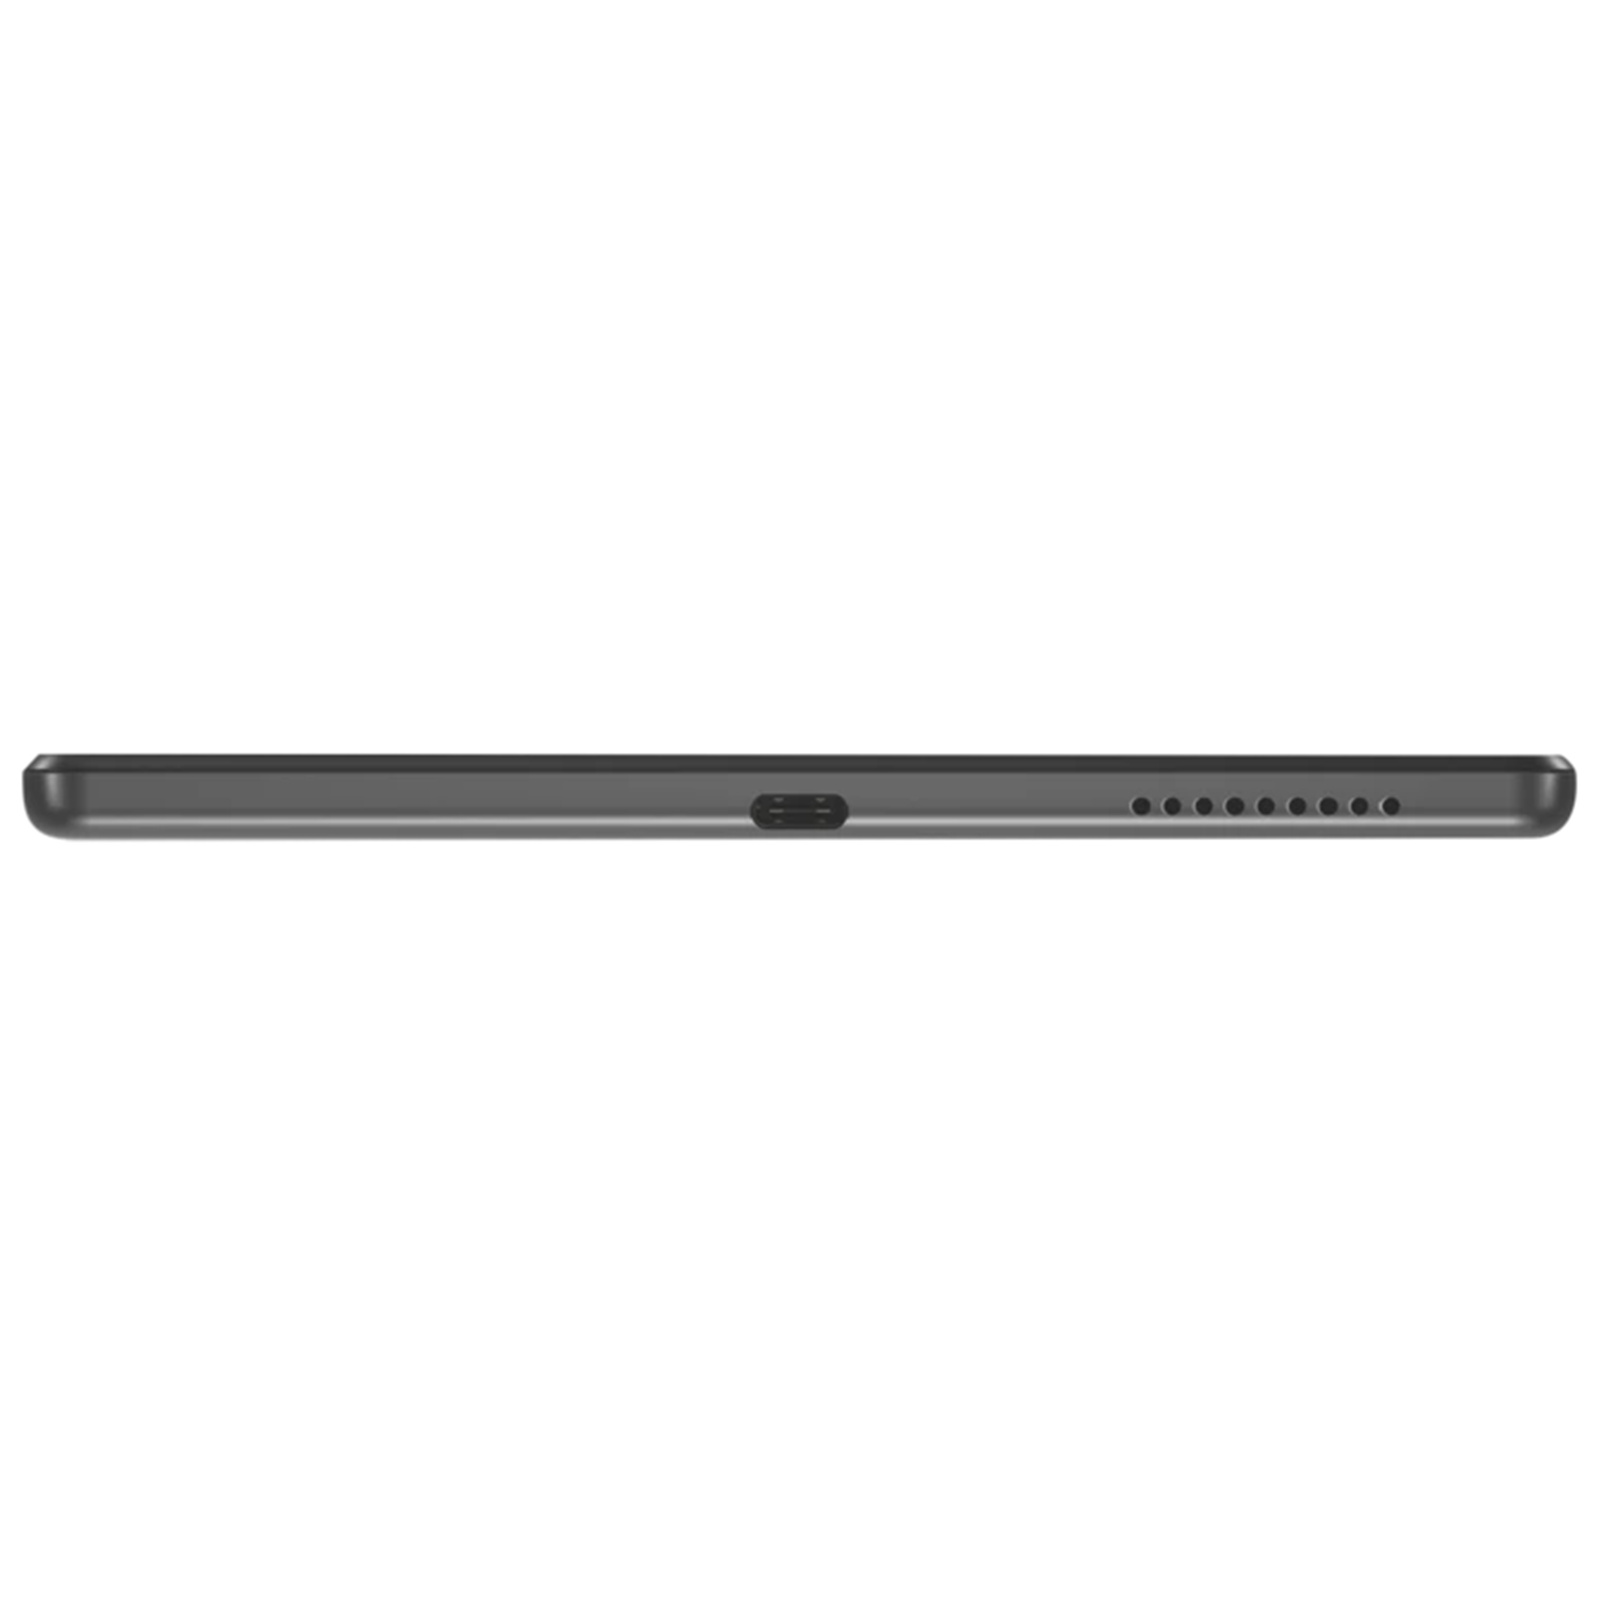 Lenovo Tab M10 HD (2nd Gen) 32GB, Wi-Fi, 10.1 Inch Tablet - Iron